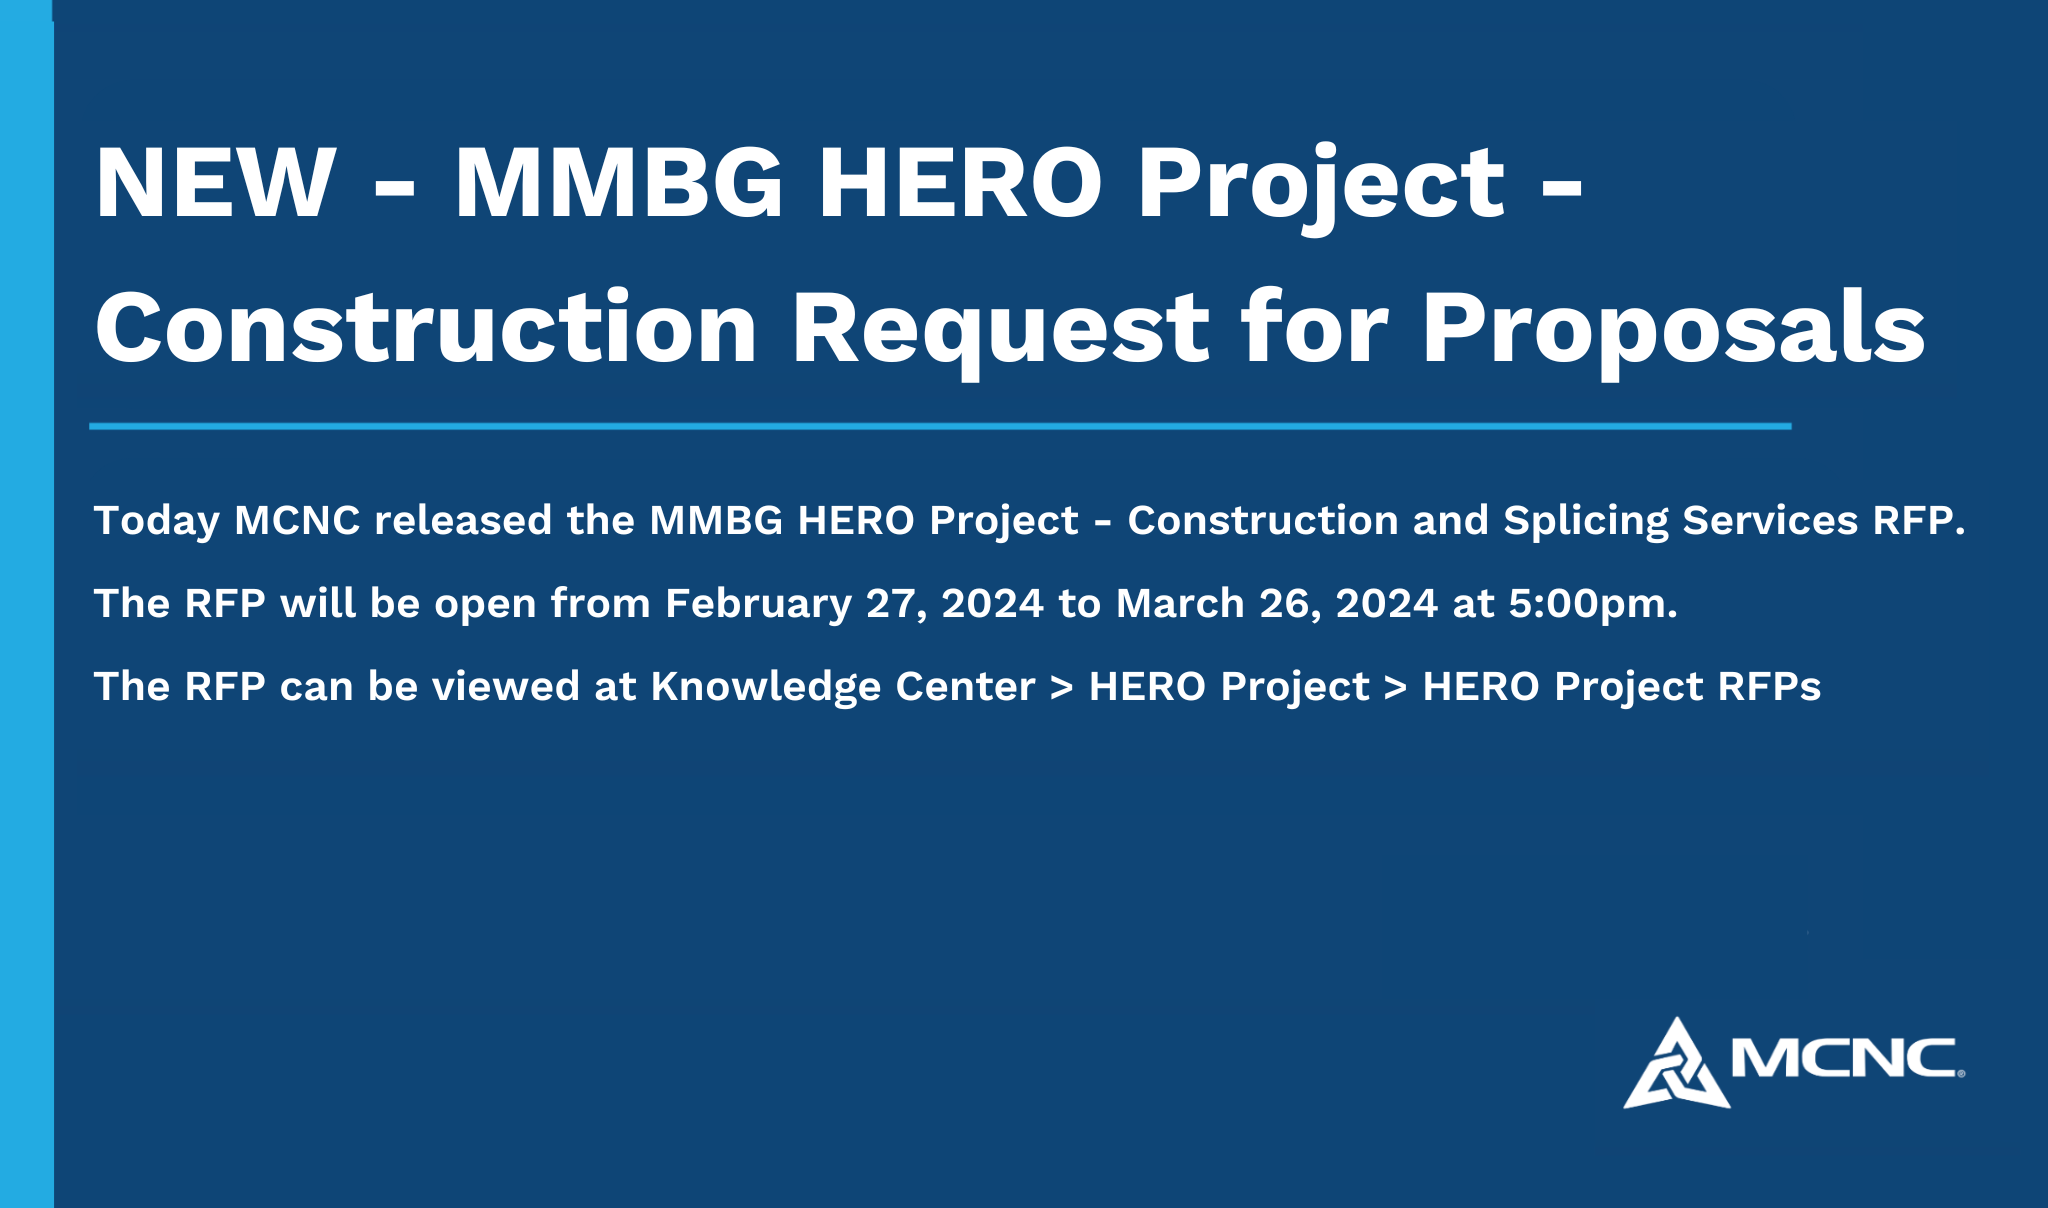 NEW - MMBG HERO Project - Construction RFP